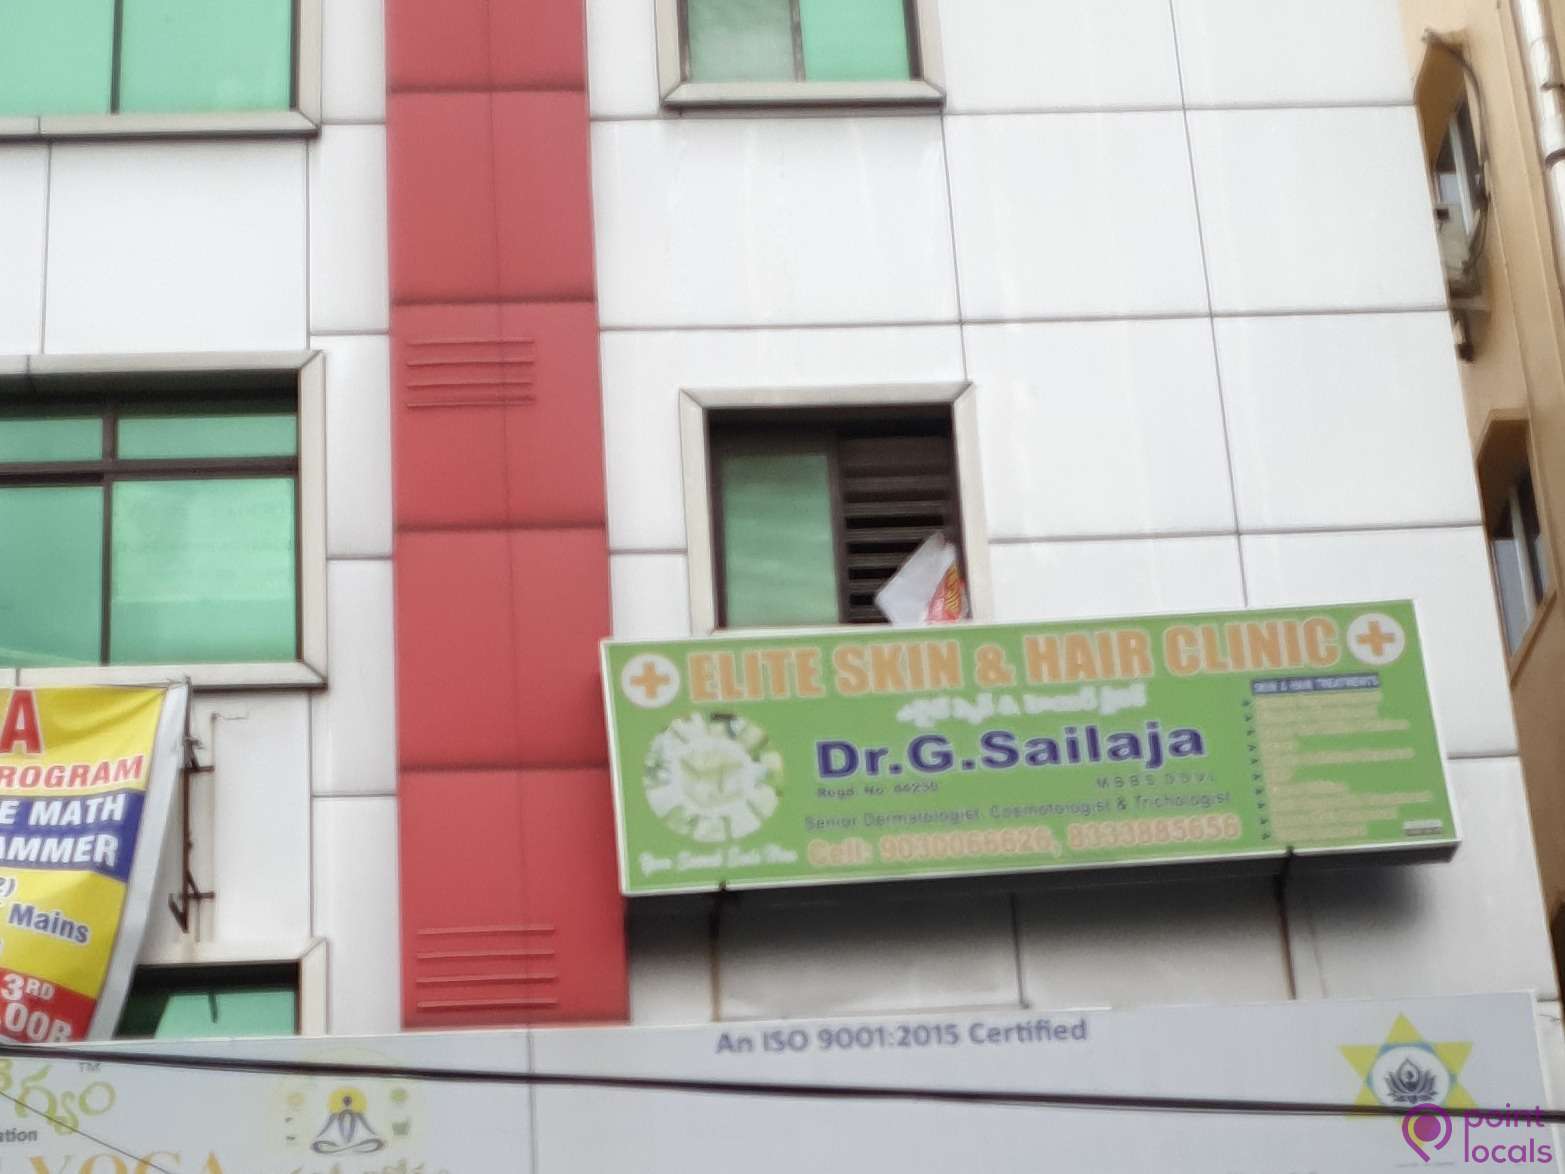 Elite Skin Hair Clinic - Hair Transplantation Clinic in Hyderabad,Telangana  | Pointlocals